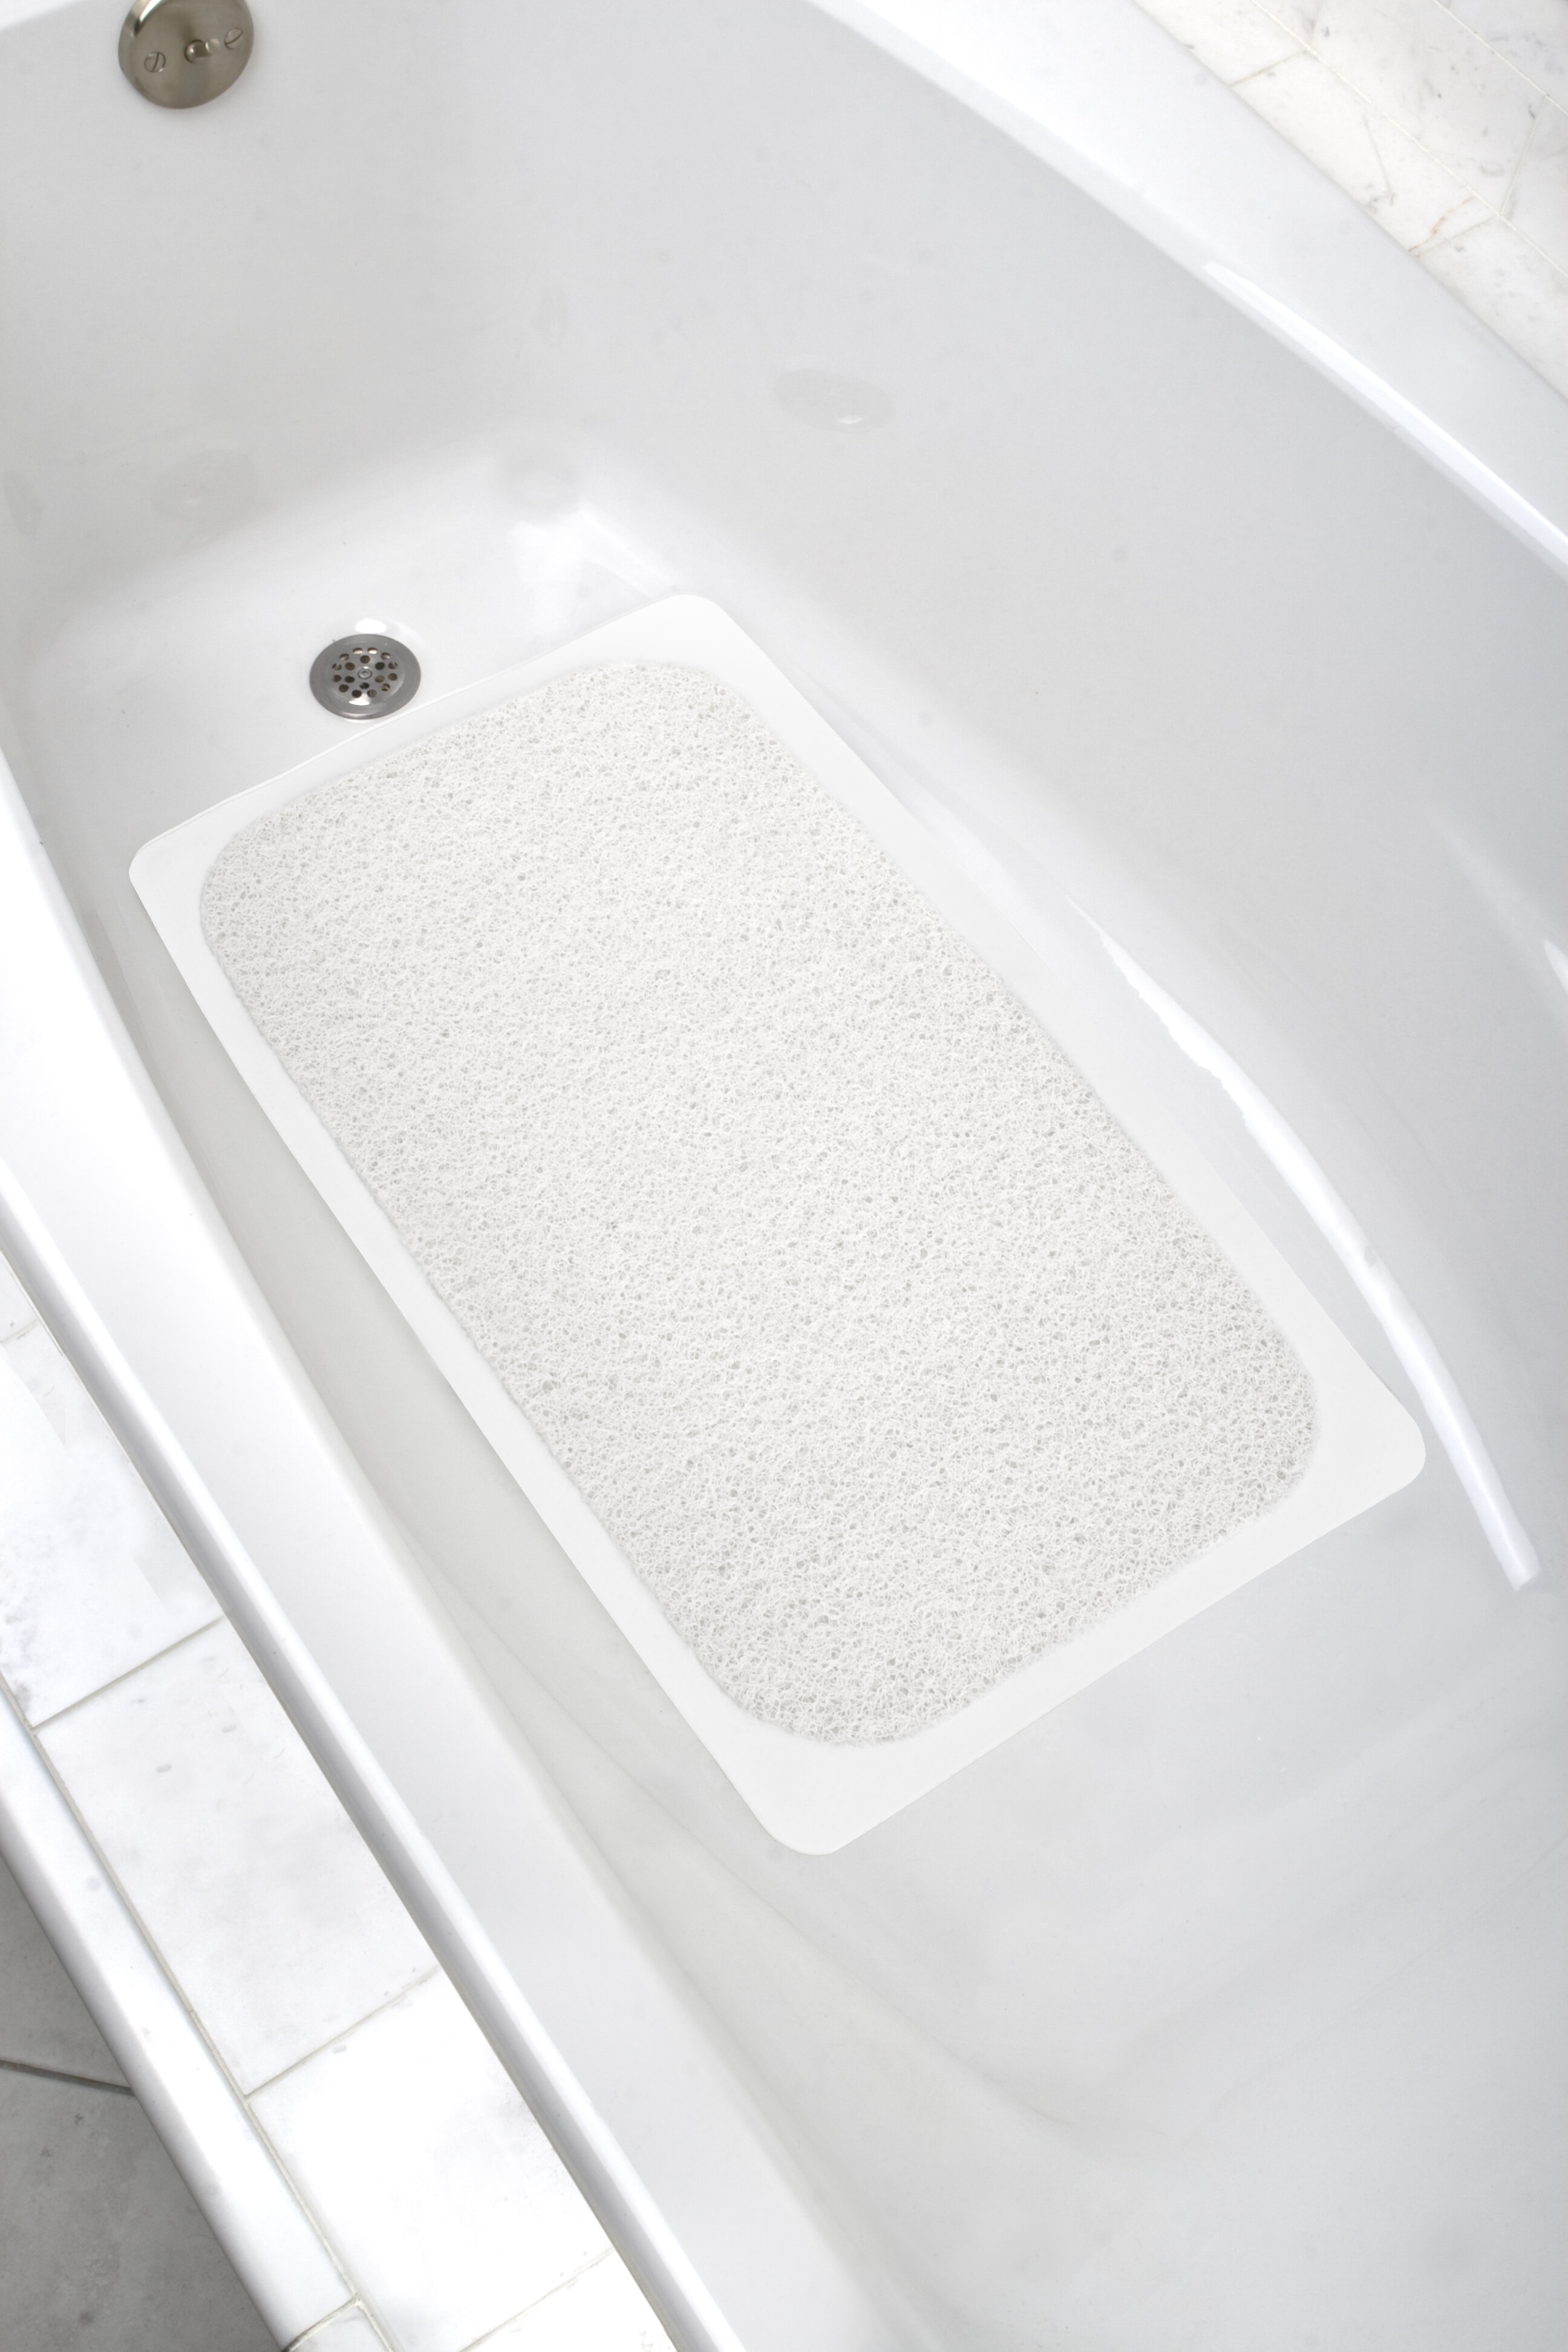 Shower Mat Bathtub Mat Non-Slip, Anti Slip Loofah Shower Mat, Soft Bath Tub  Mat for Textured Surface, Easy Cleaning Bathroom Floor Mat for Wet Areas